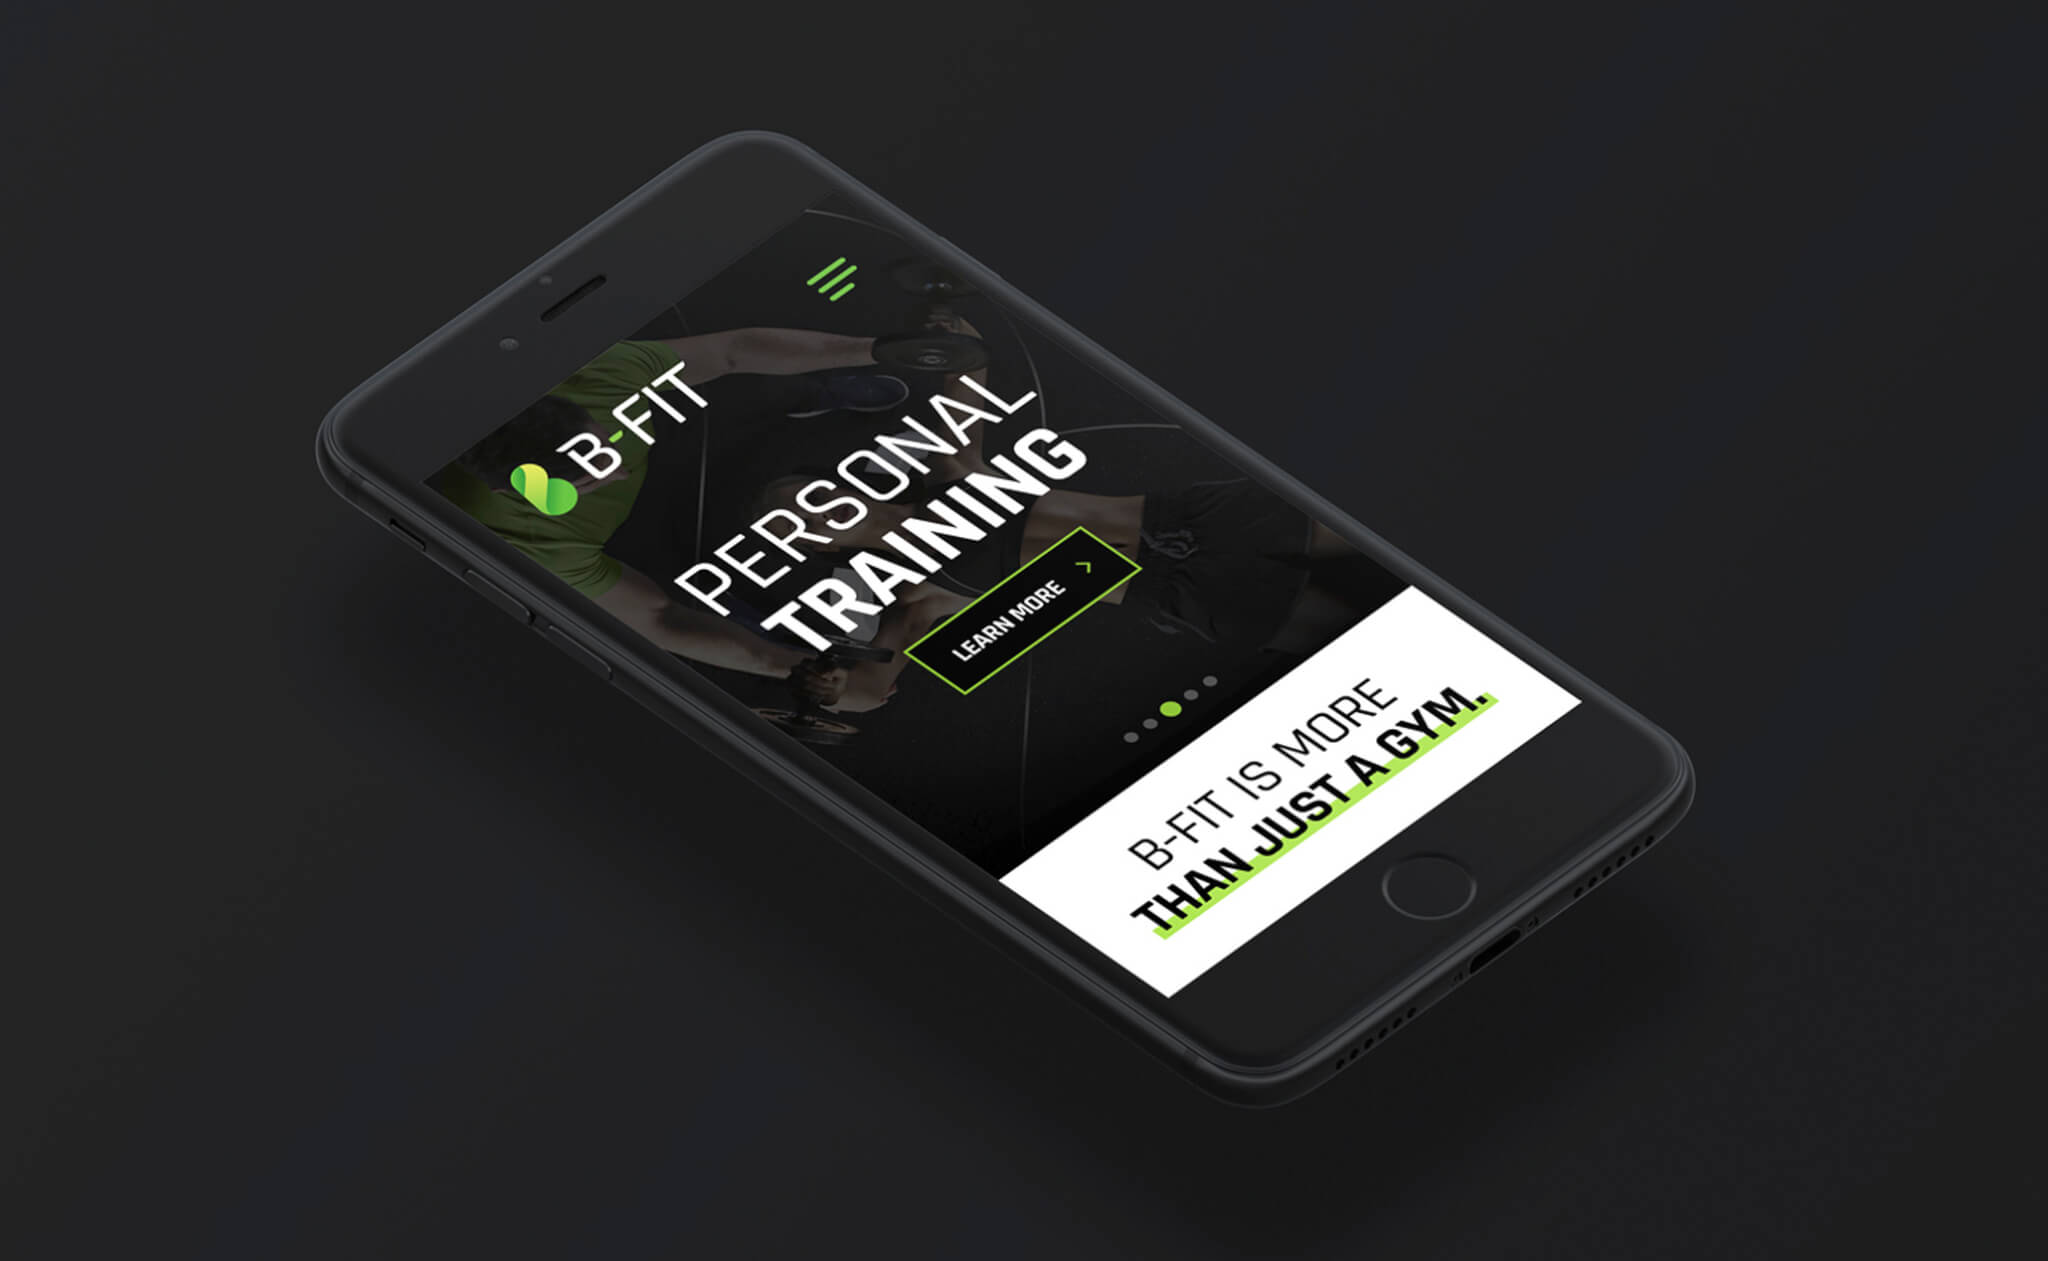 B-Fit gym website design project